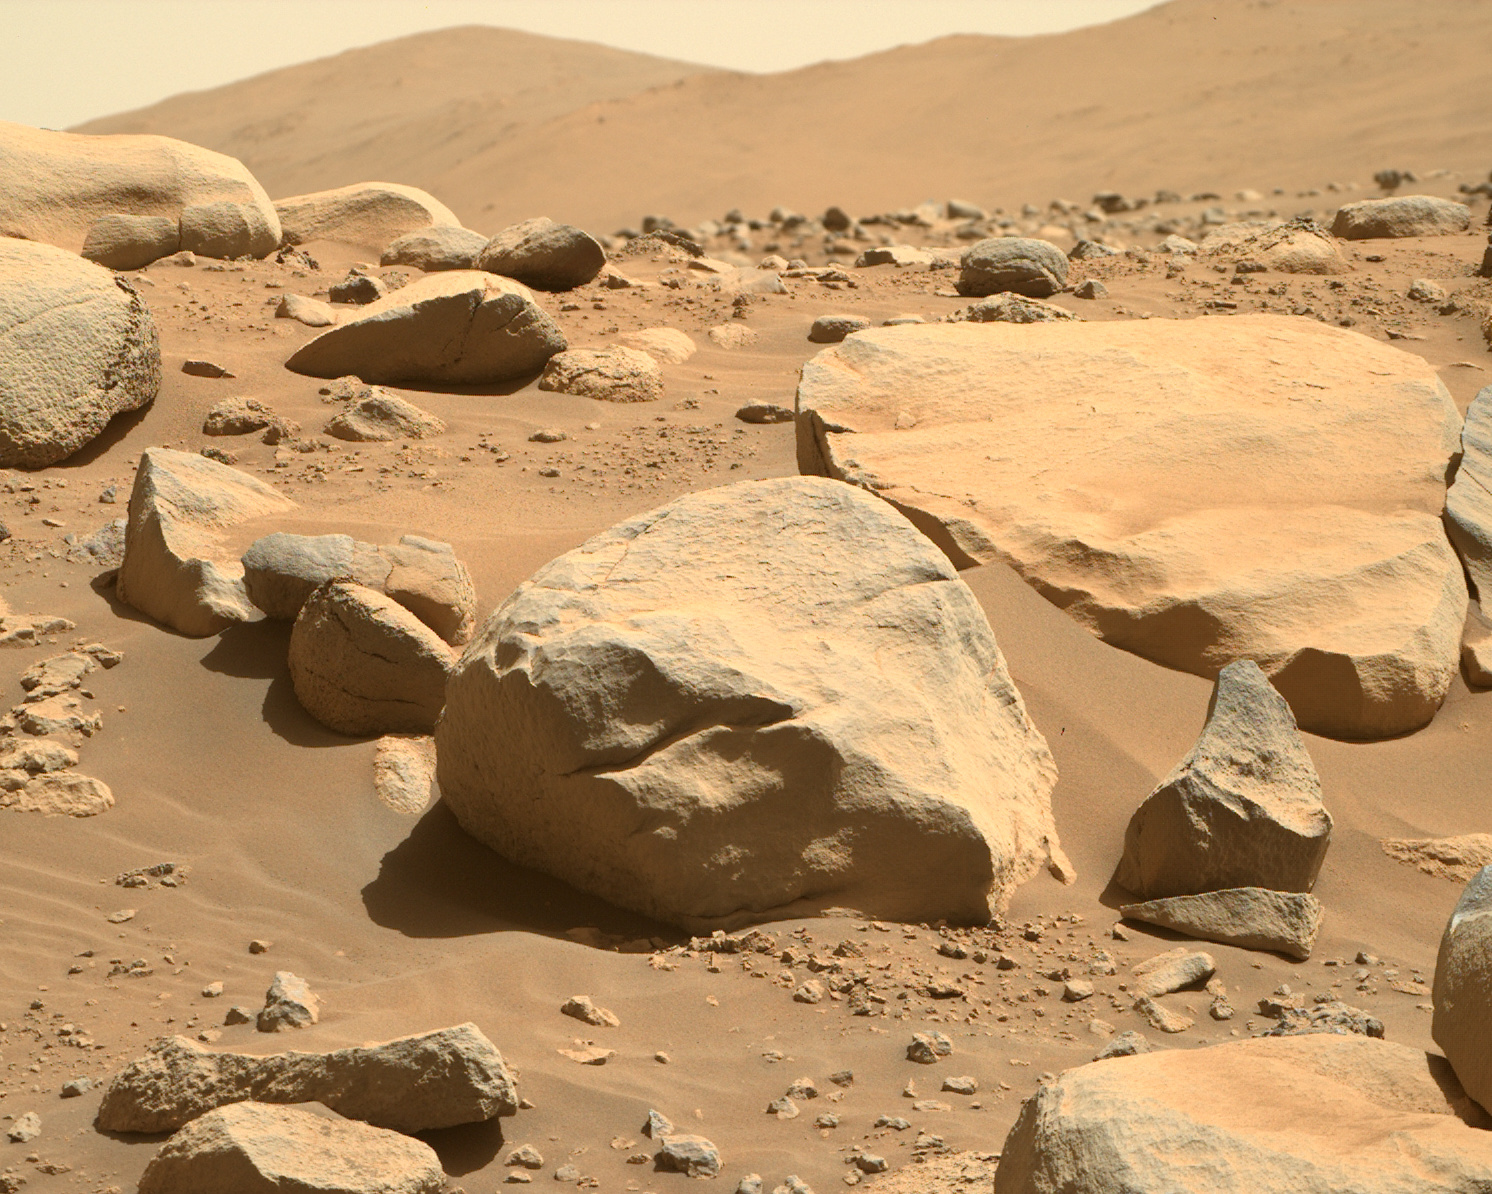 Postcard from Mars, June 15, 2023